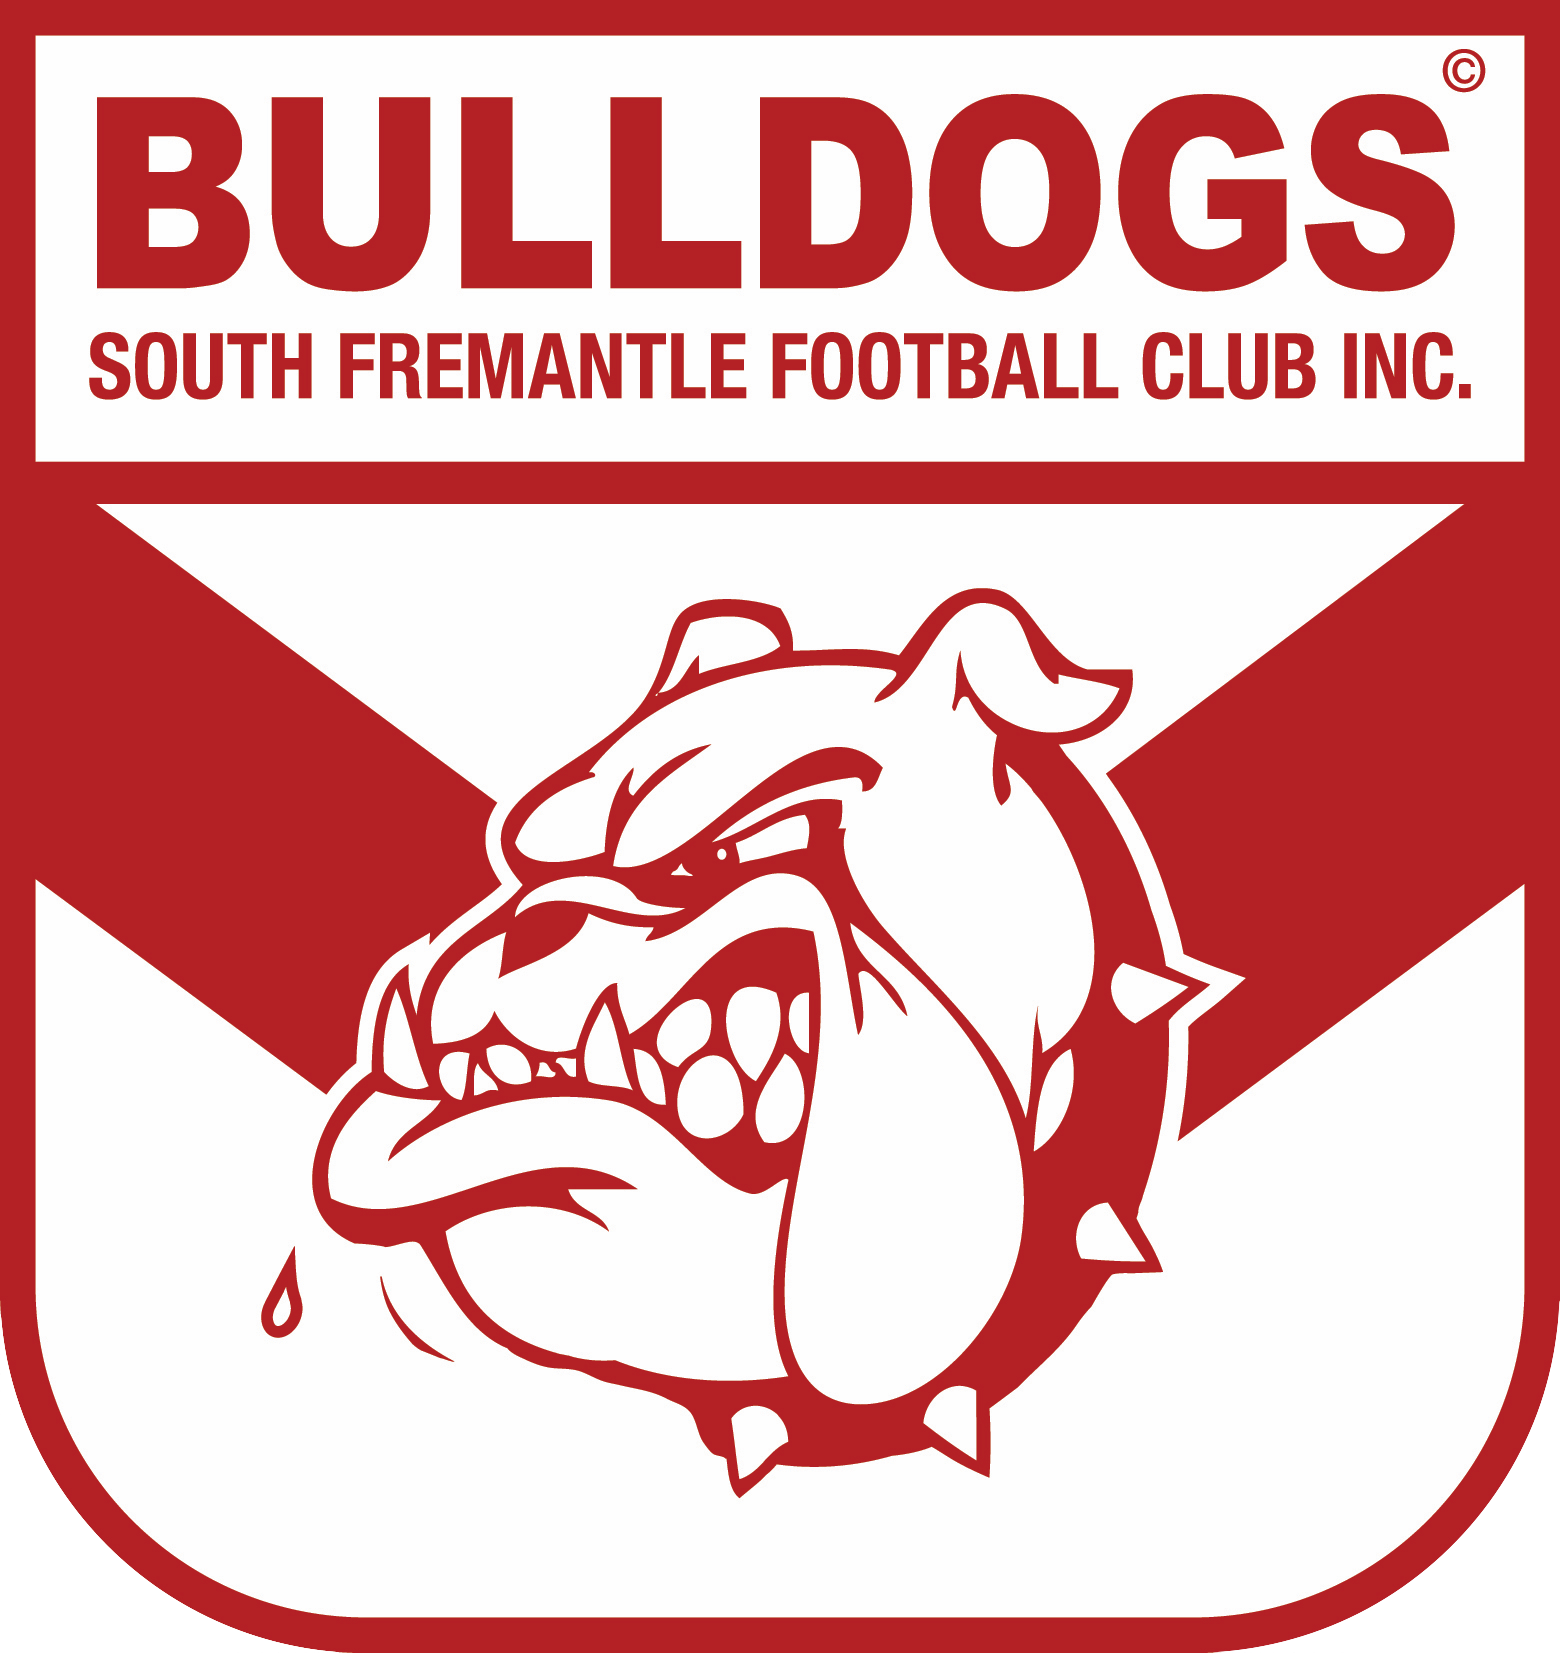 South Fremantle Football Club